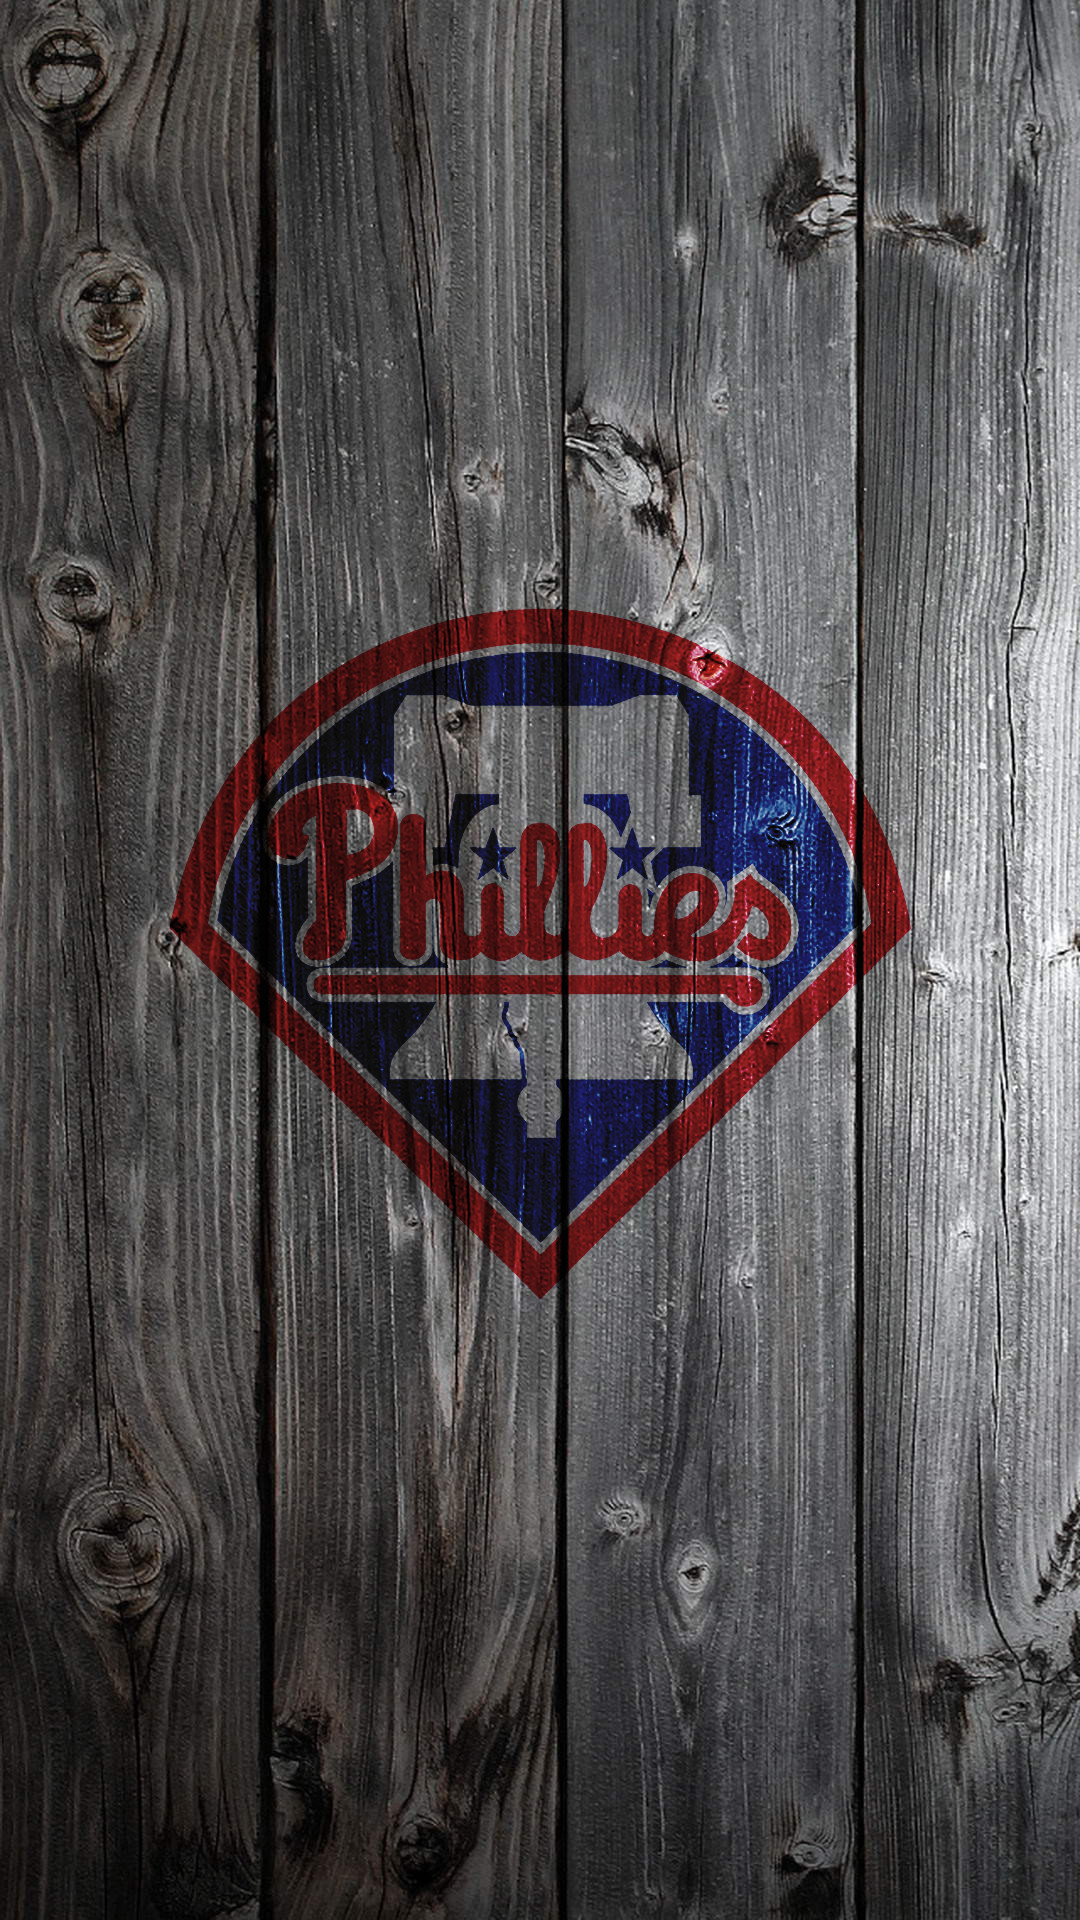 Philadelphia Phillies on Twitter New season New wallpaper OpeningDay   RingTheBell httpstcoMzJYF6RiEQ  Twitter